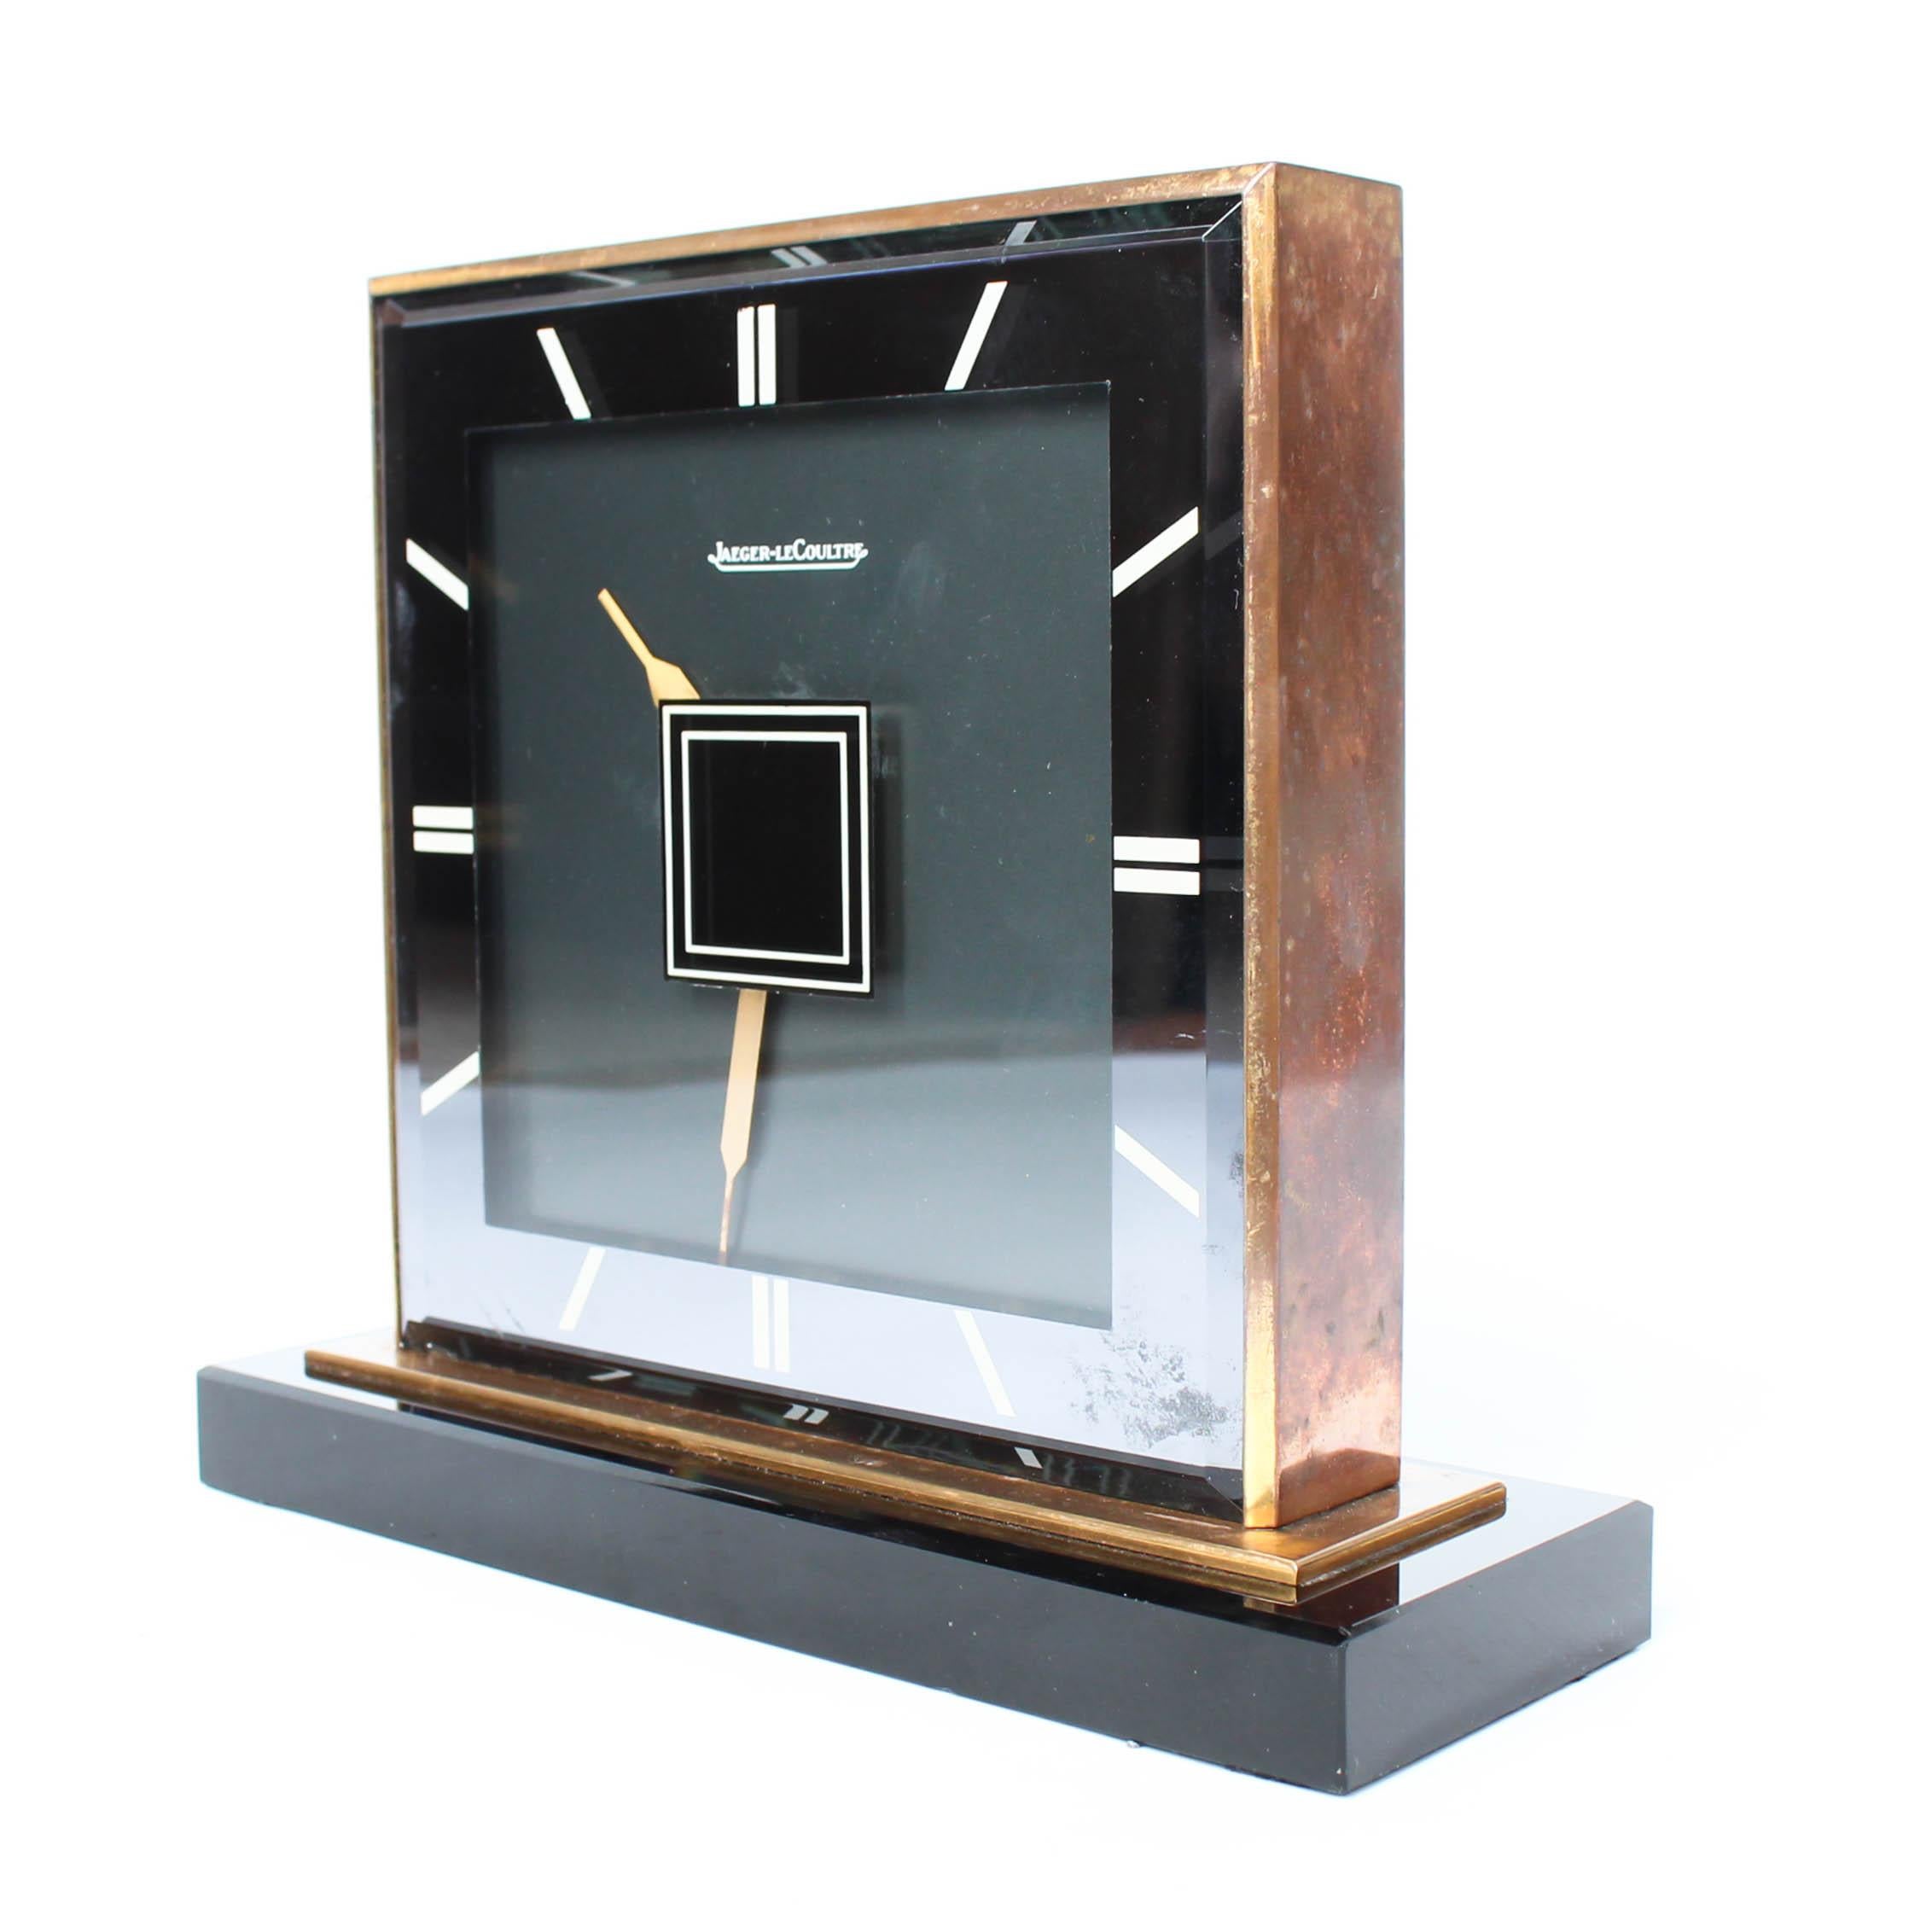 A rare, Art Deco, Jaeger LeCoultre double sided desk clock. 8 day movement. Fully serviced.

Dimensions: H 19cm W 17cm D 7cm

Origin: Swiss

Date circa 1930

